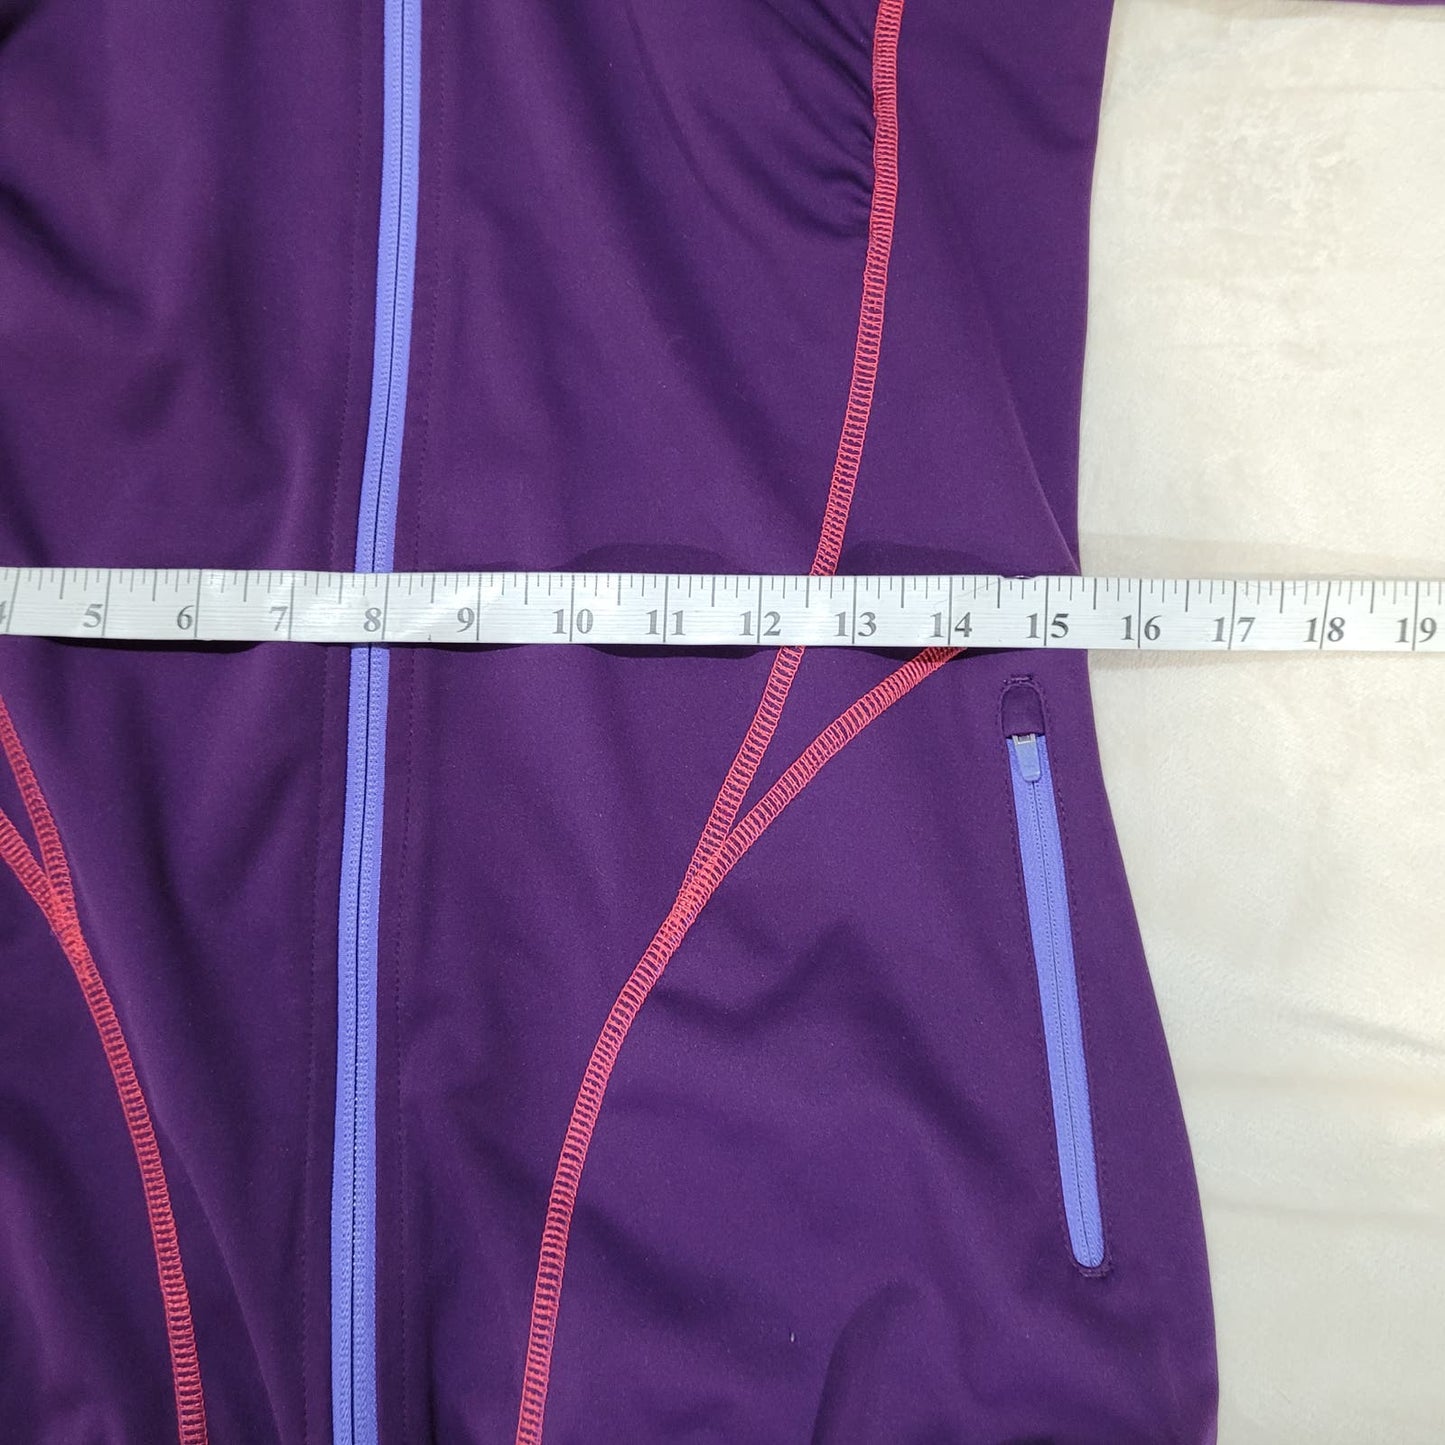 Merrell Clarity Athletic/Running Jacket Lightweight Coat - Size Small